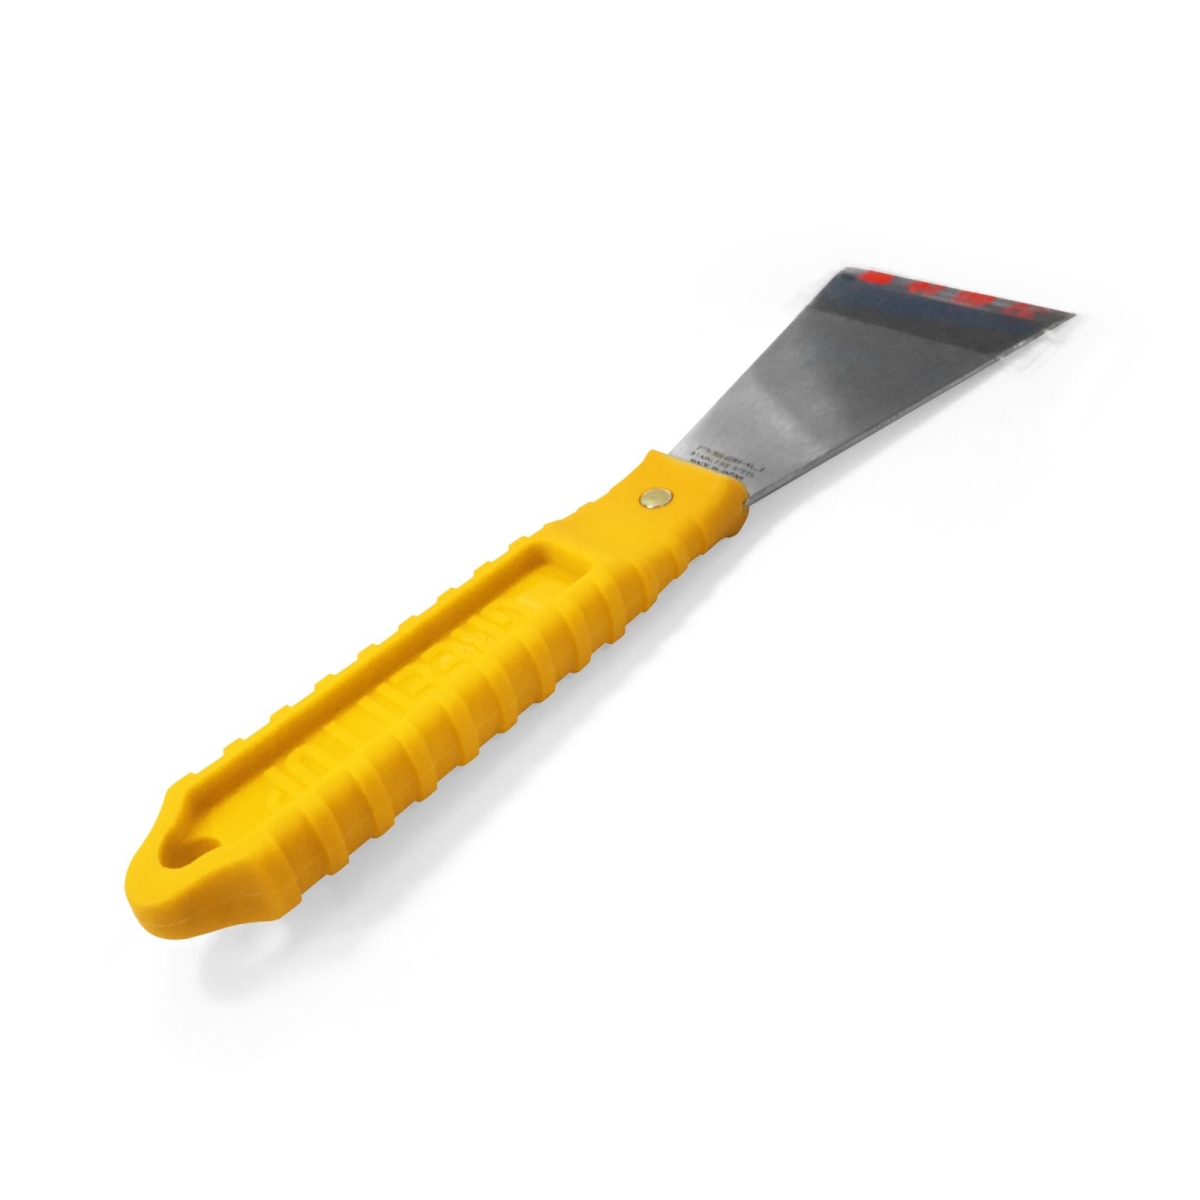 Njp620 2.2 In. Blade Stainless Steel Straight Y-shaped Scraper Knife, Yellow